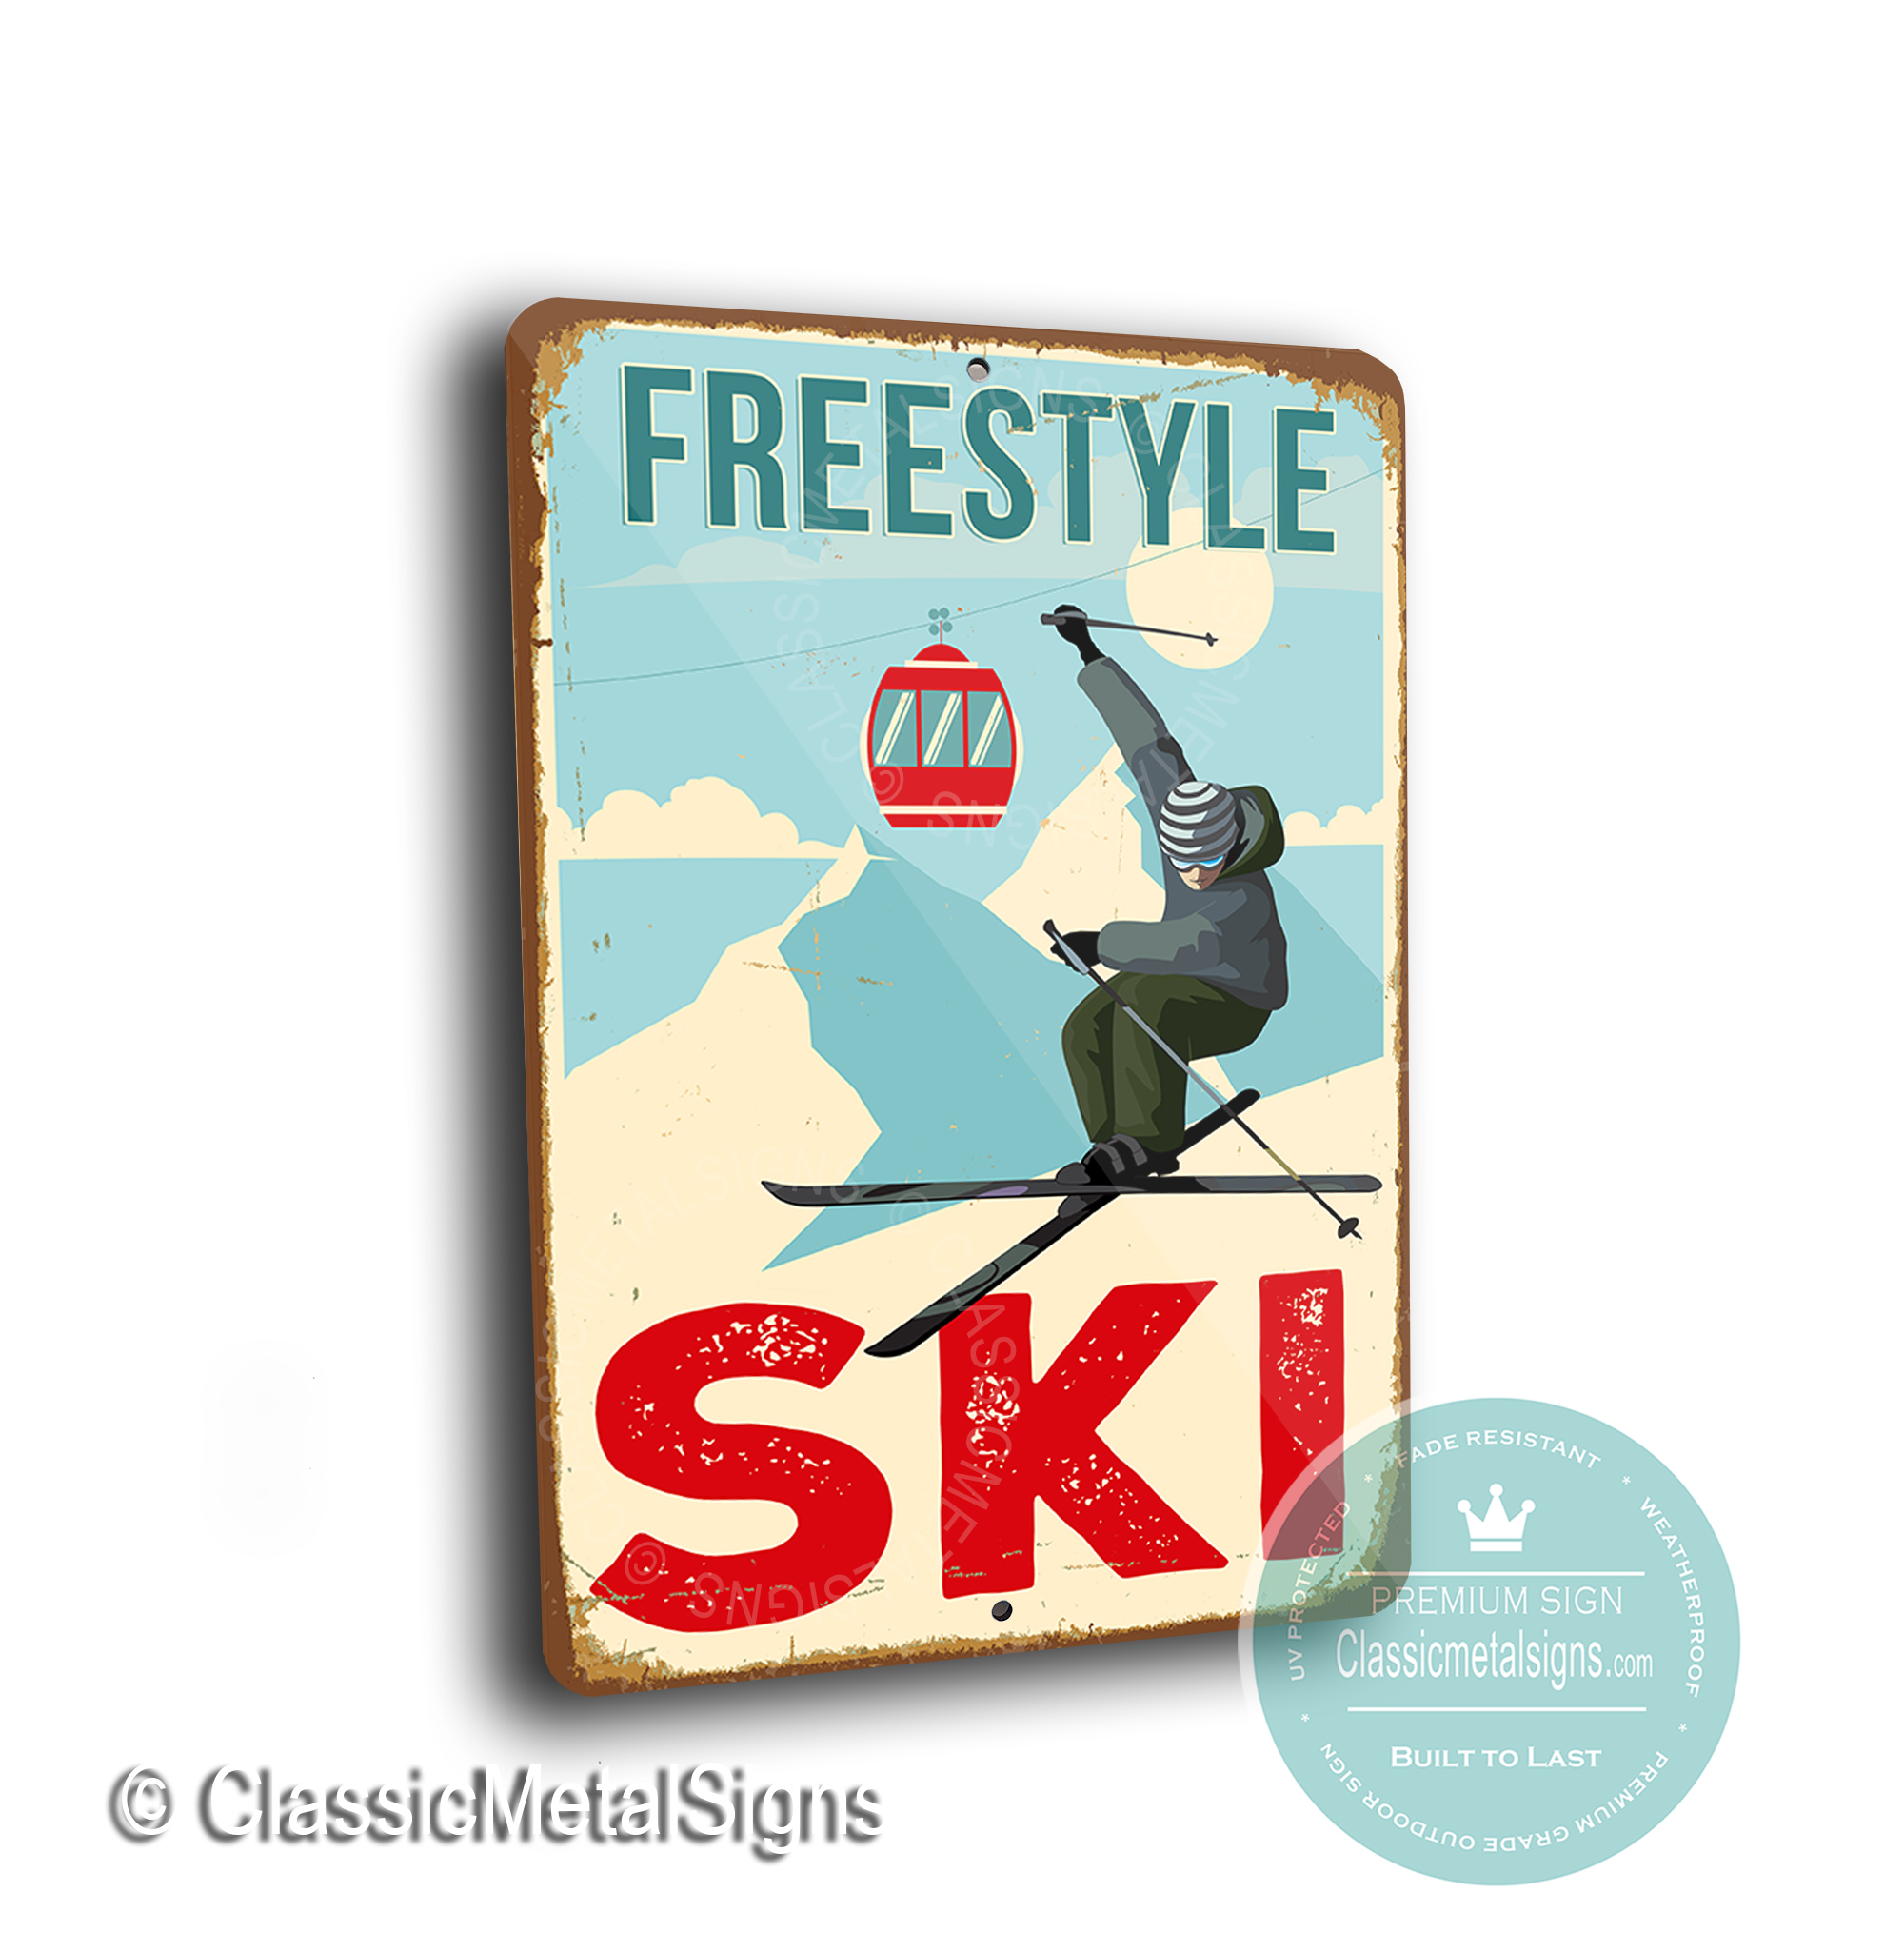 Freestyle Ski Signs